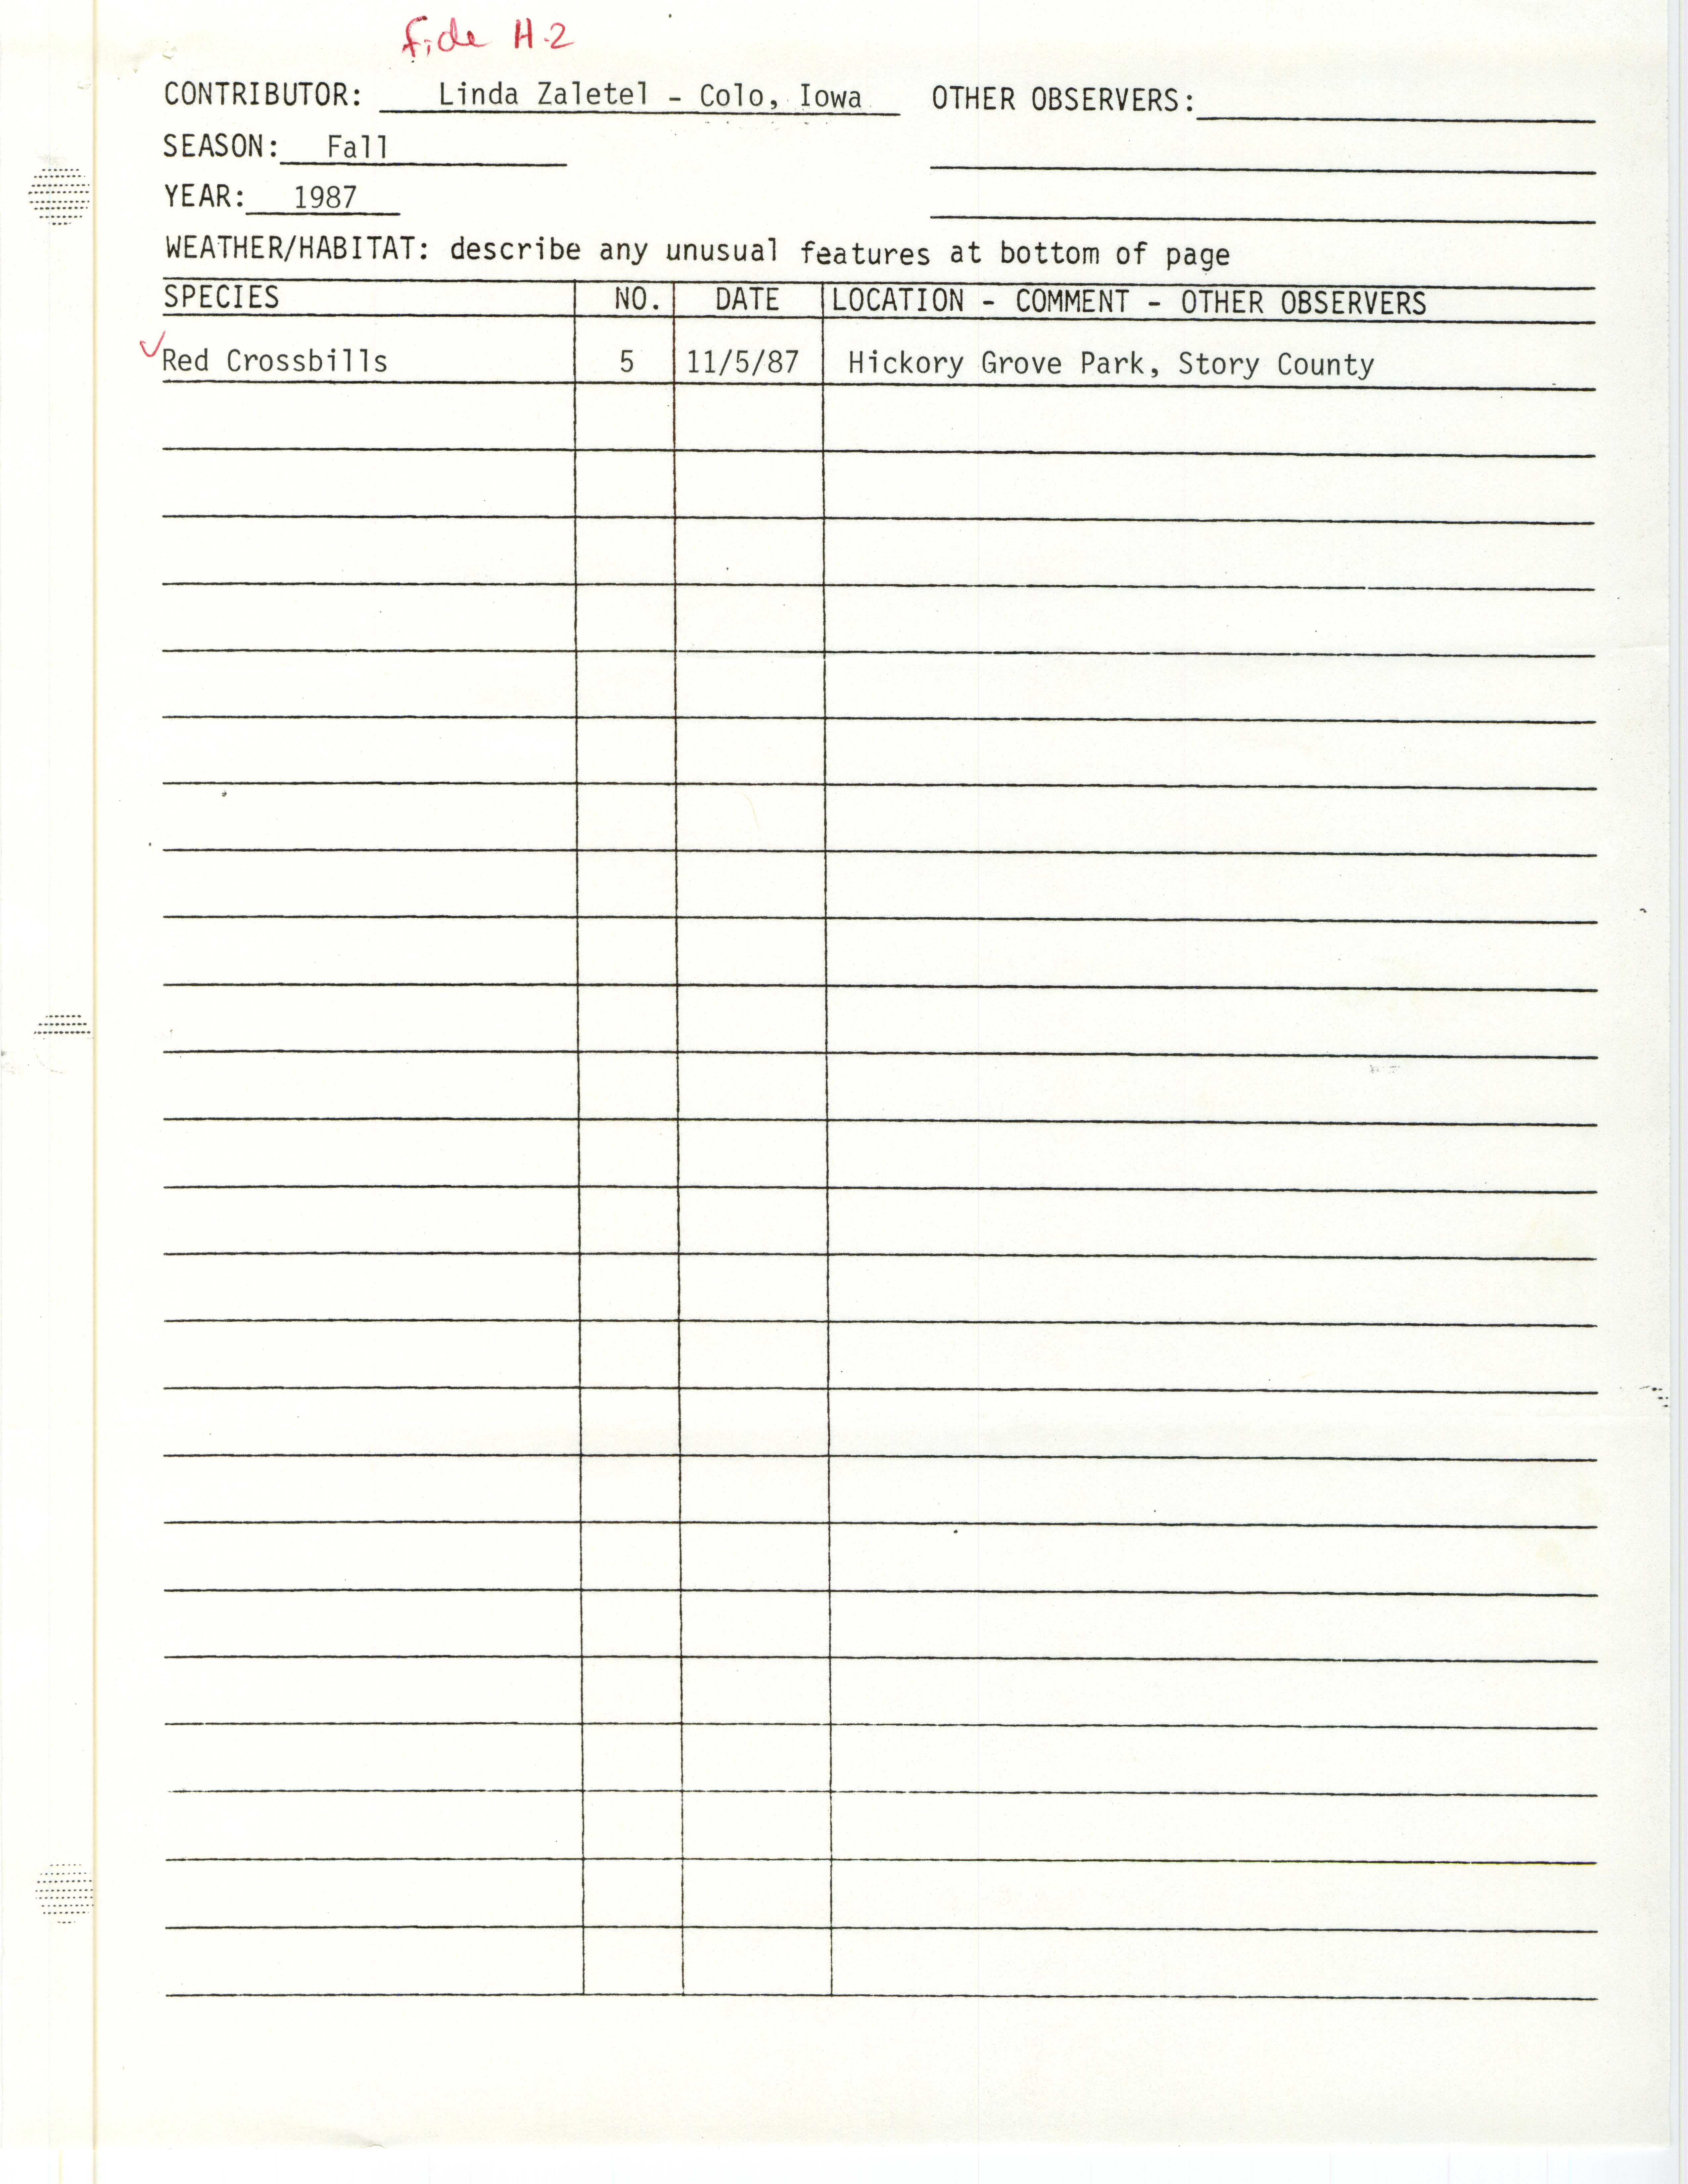 Fall field note contributed by Linda Zaletel, fall 1987